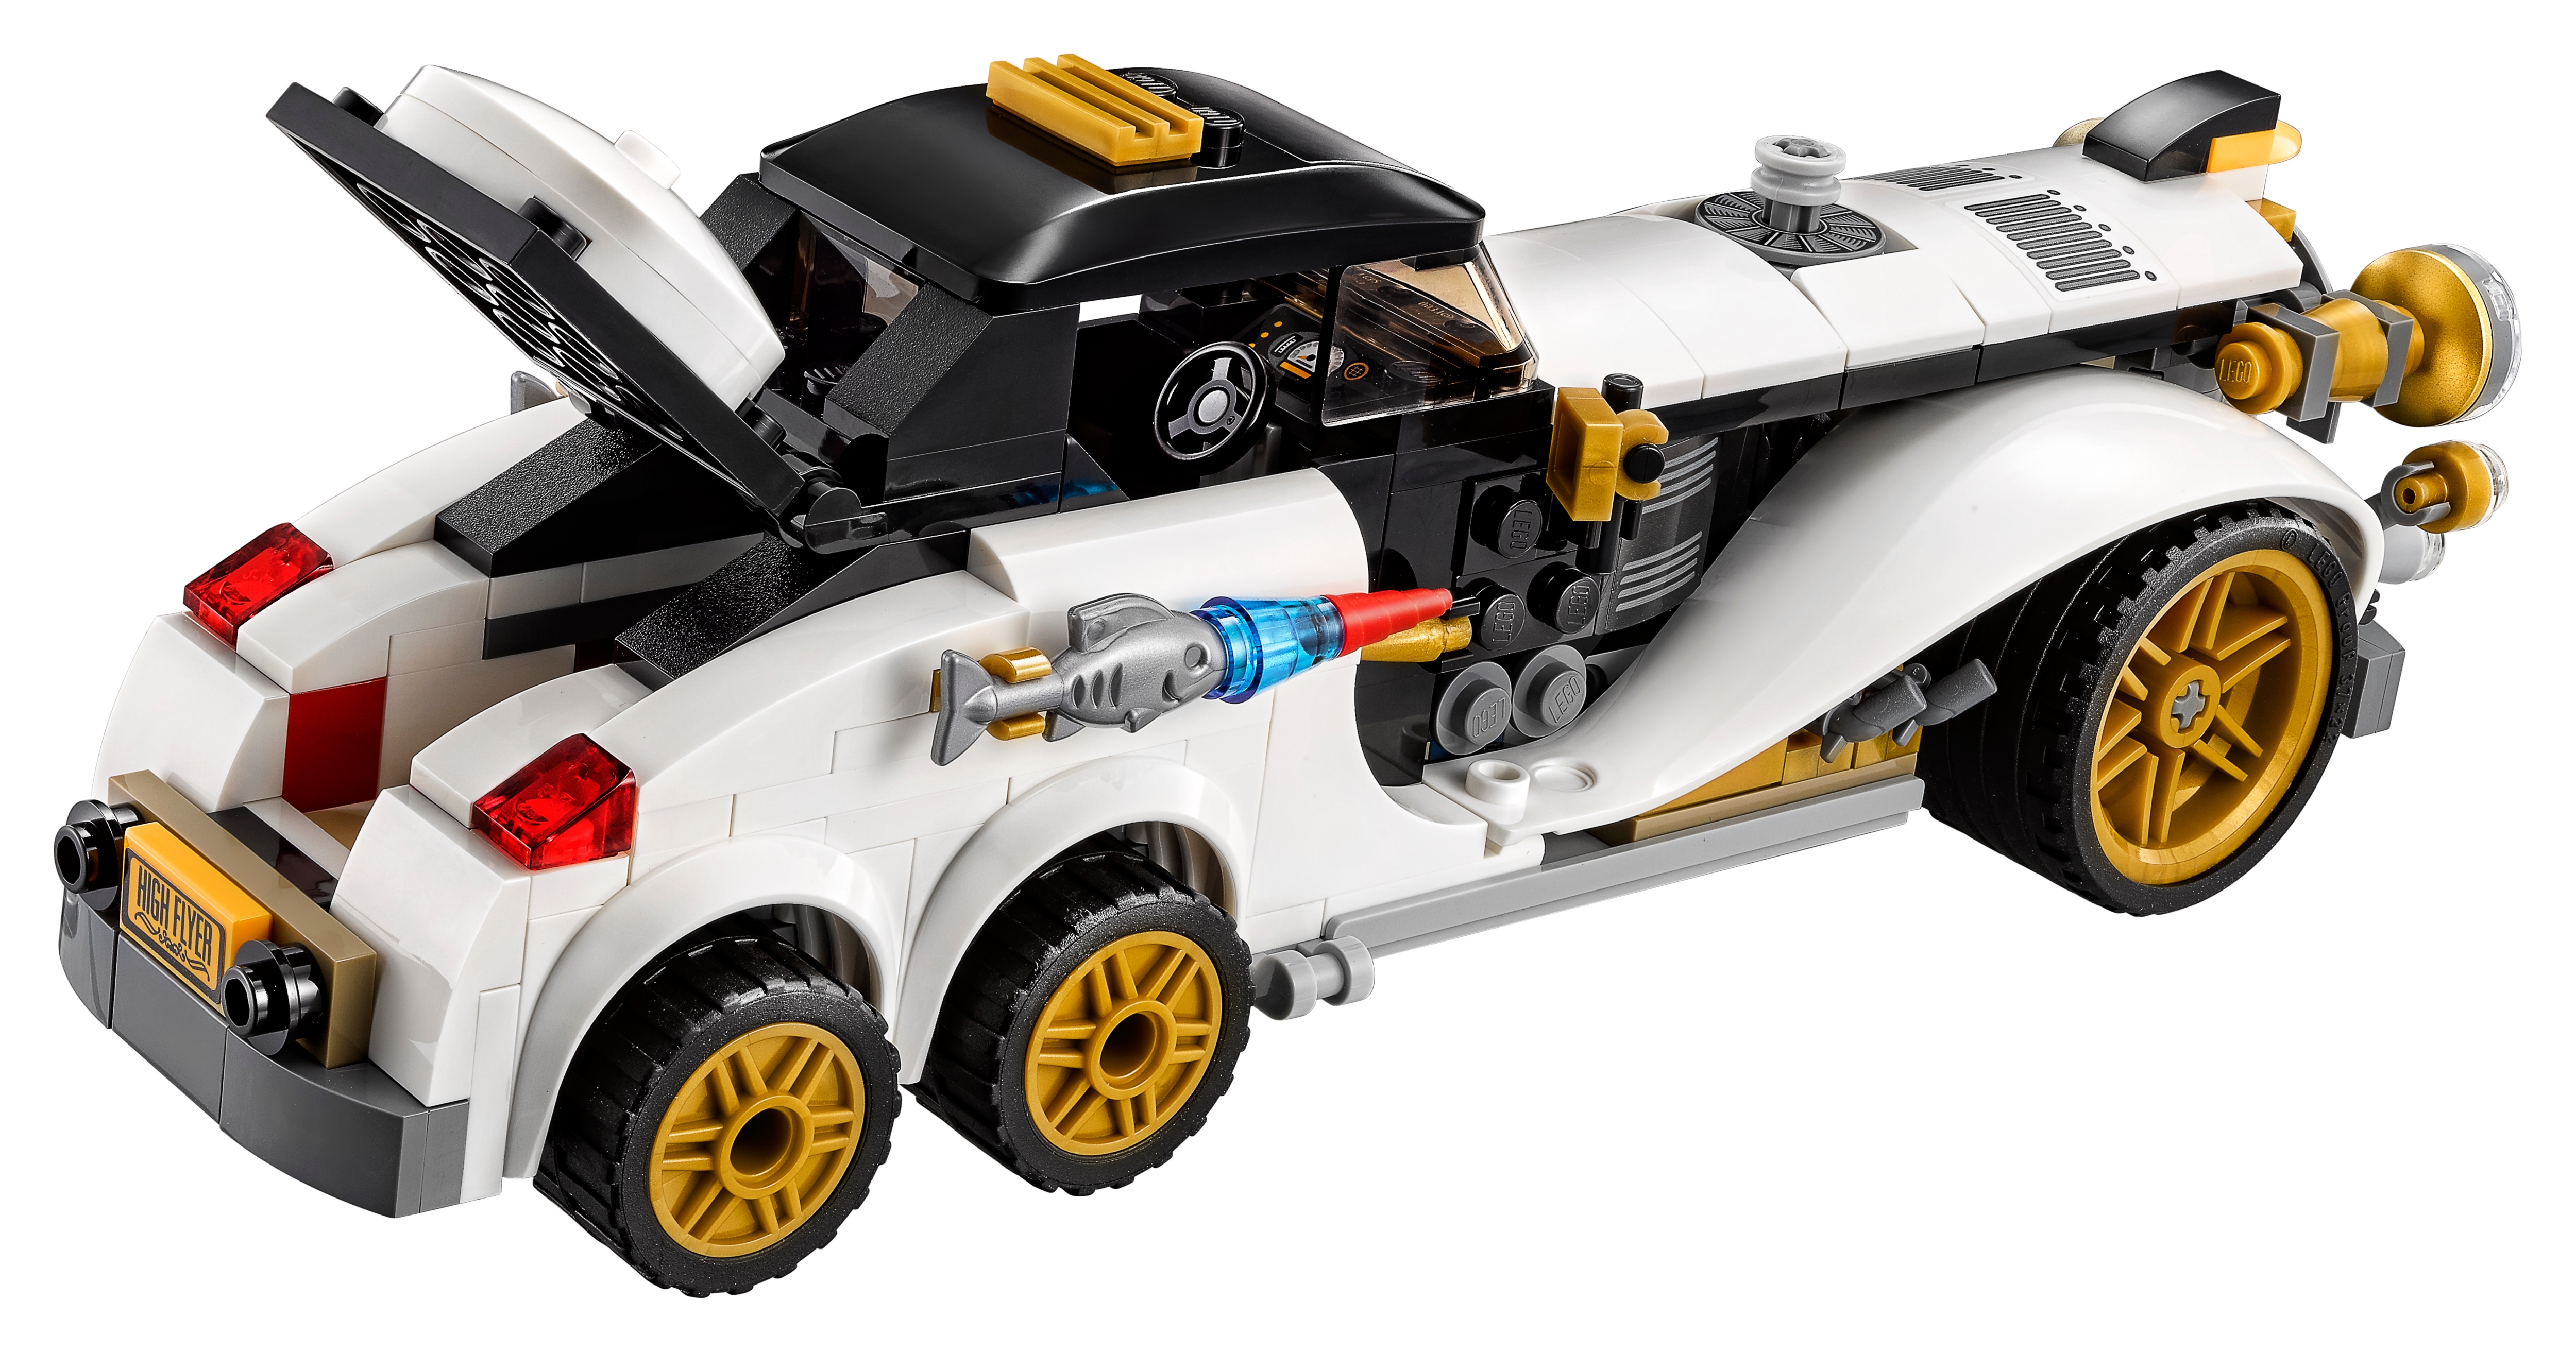 The Penguin™ Arctic Roller 70911, THE LEGO® BATMAN MOVIE